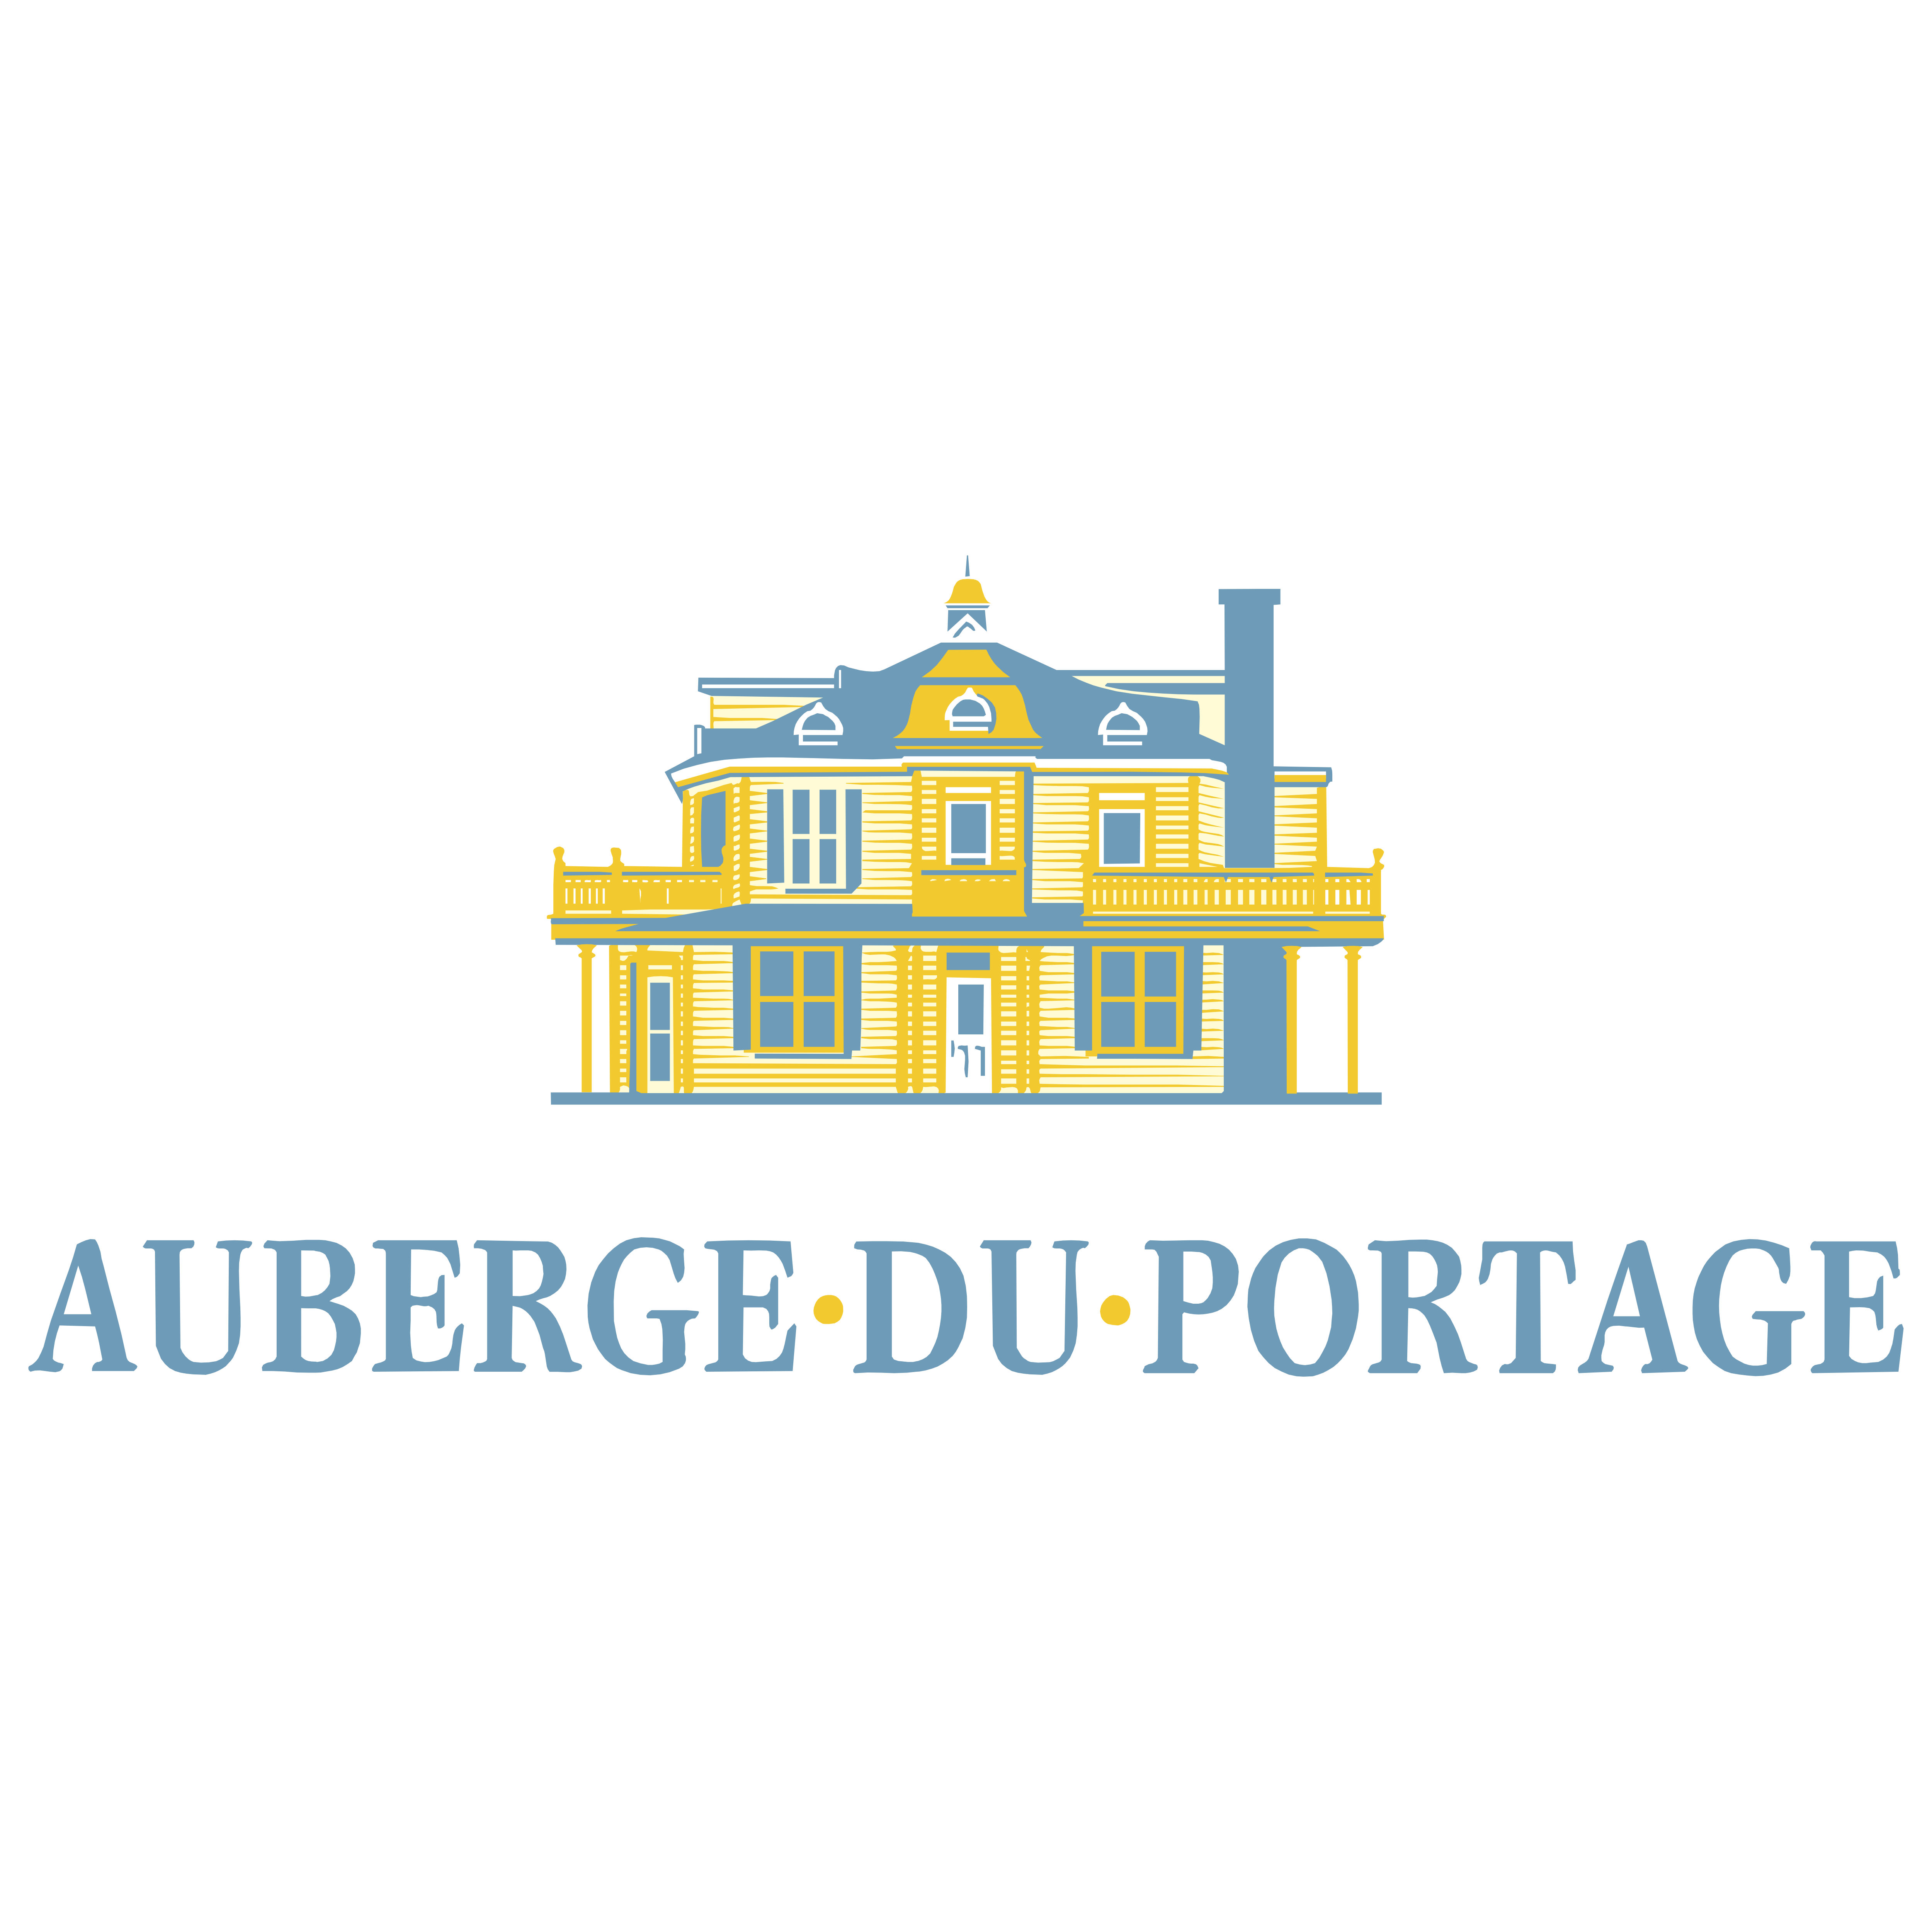 Portage Logo - Auberge du Portage – Logos Download